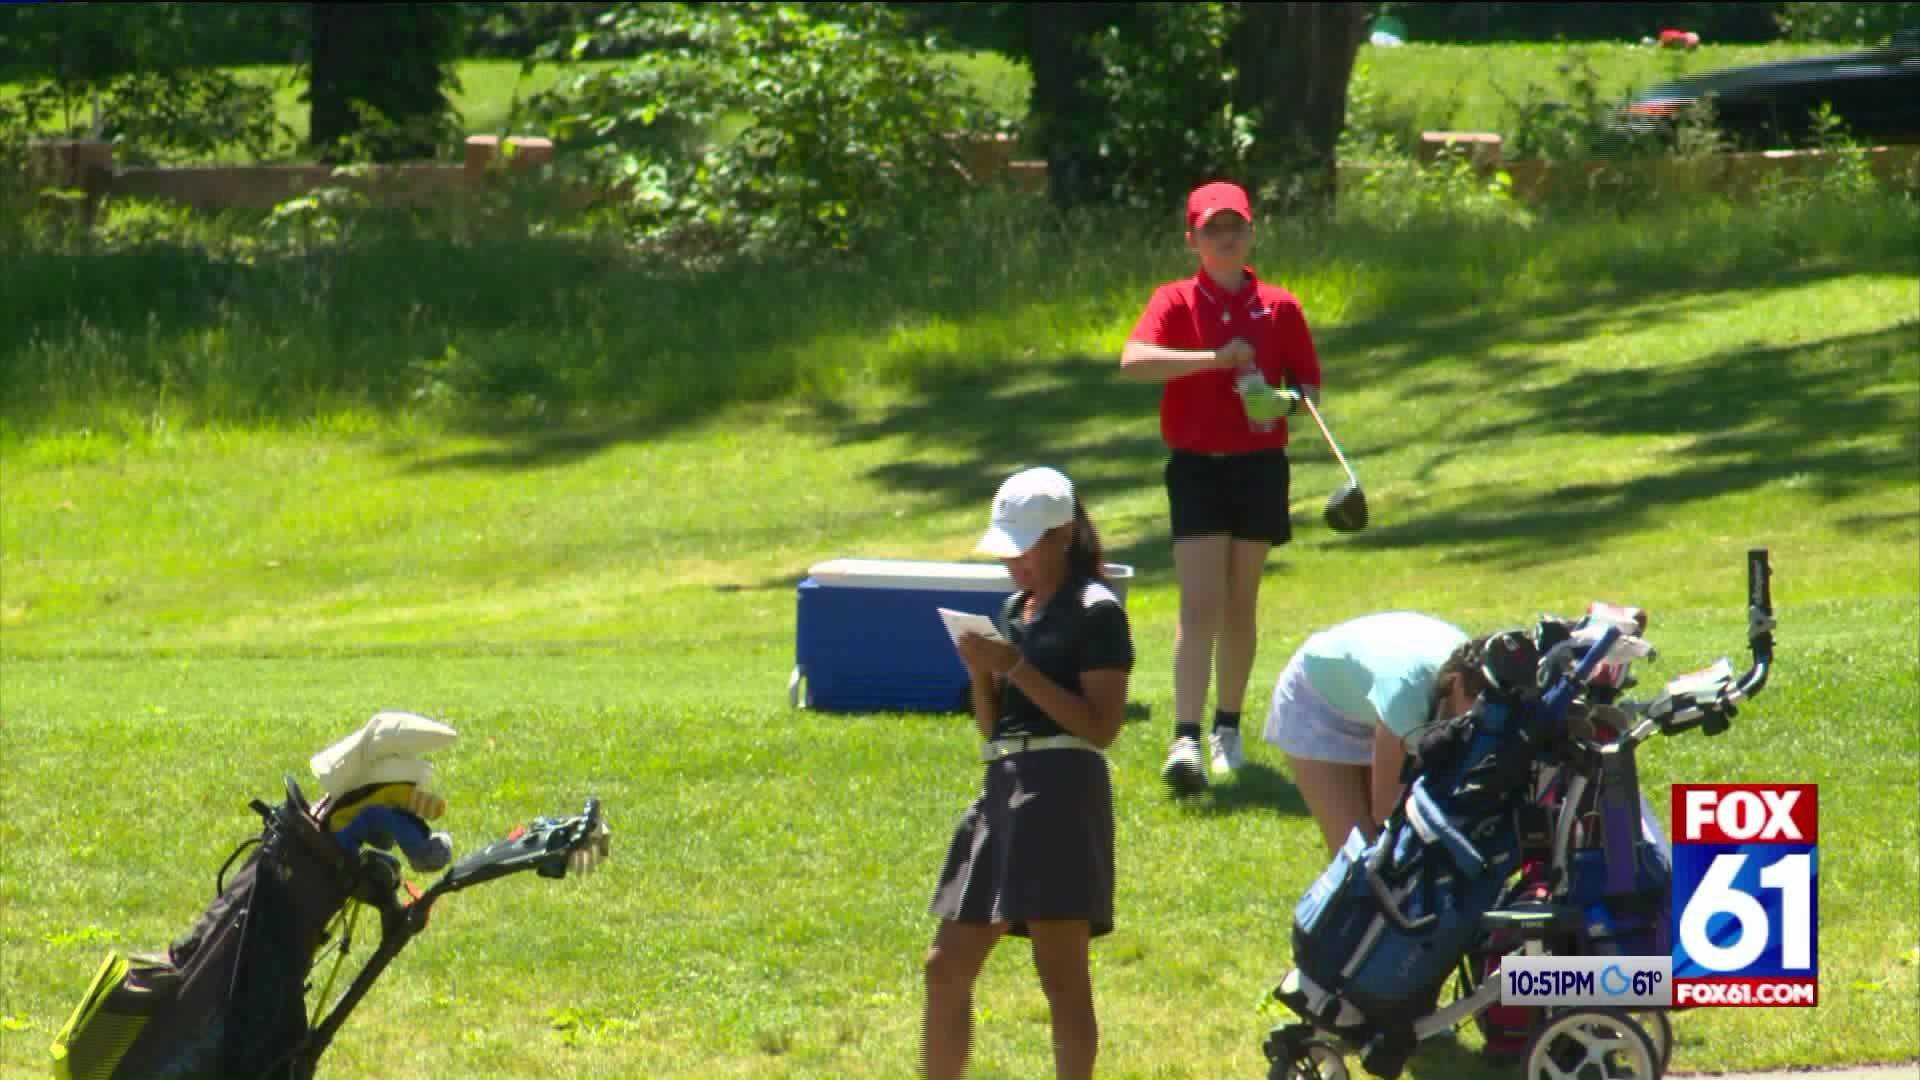 HARTFORD-- PGA`s girls and women tournament ended Sunday